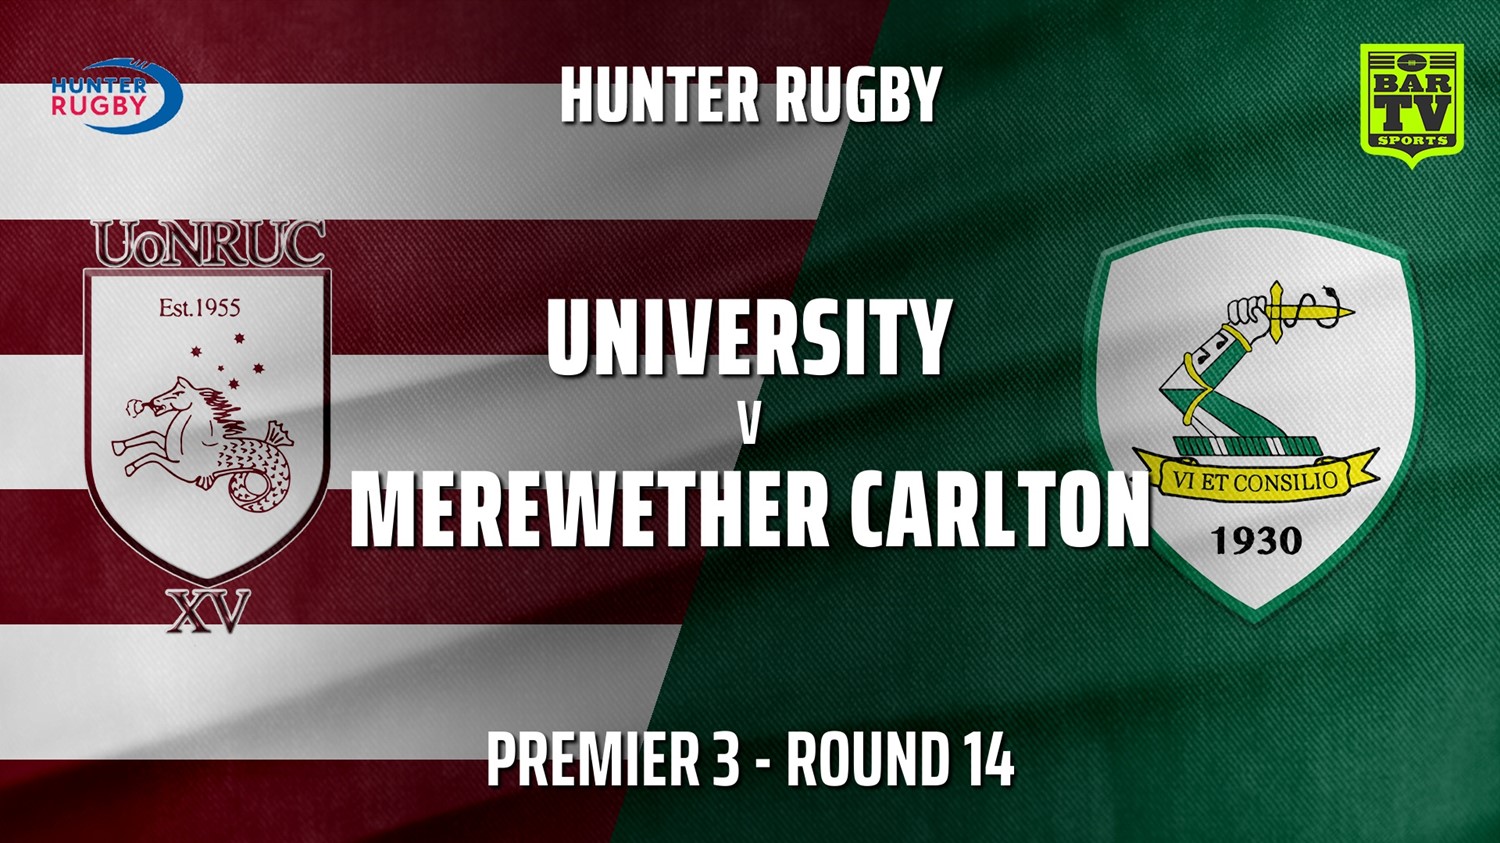 210724-Hunter Rugby Round 14 - Premier 3 - University Of Newcastle v Merewether Carlton Slate Image